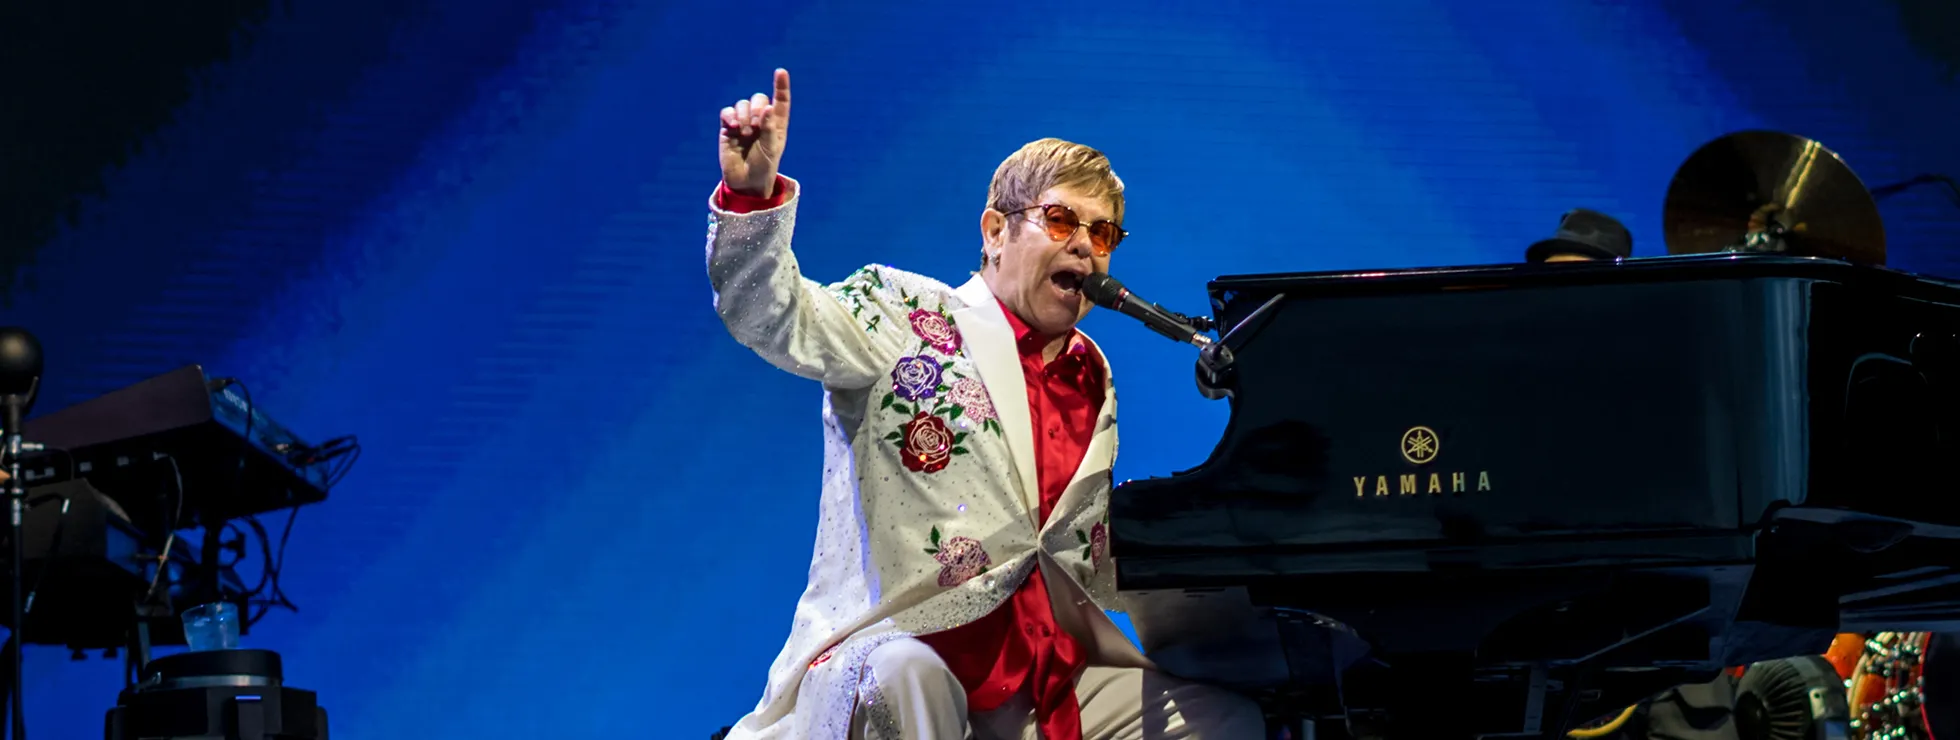 Elton John on stage at Twickenham by Raph_PH under creative commons license https://www.flickr.com/photos/raph_ph/34966611711/